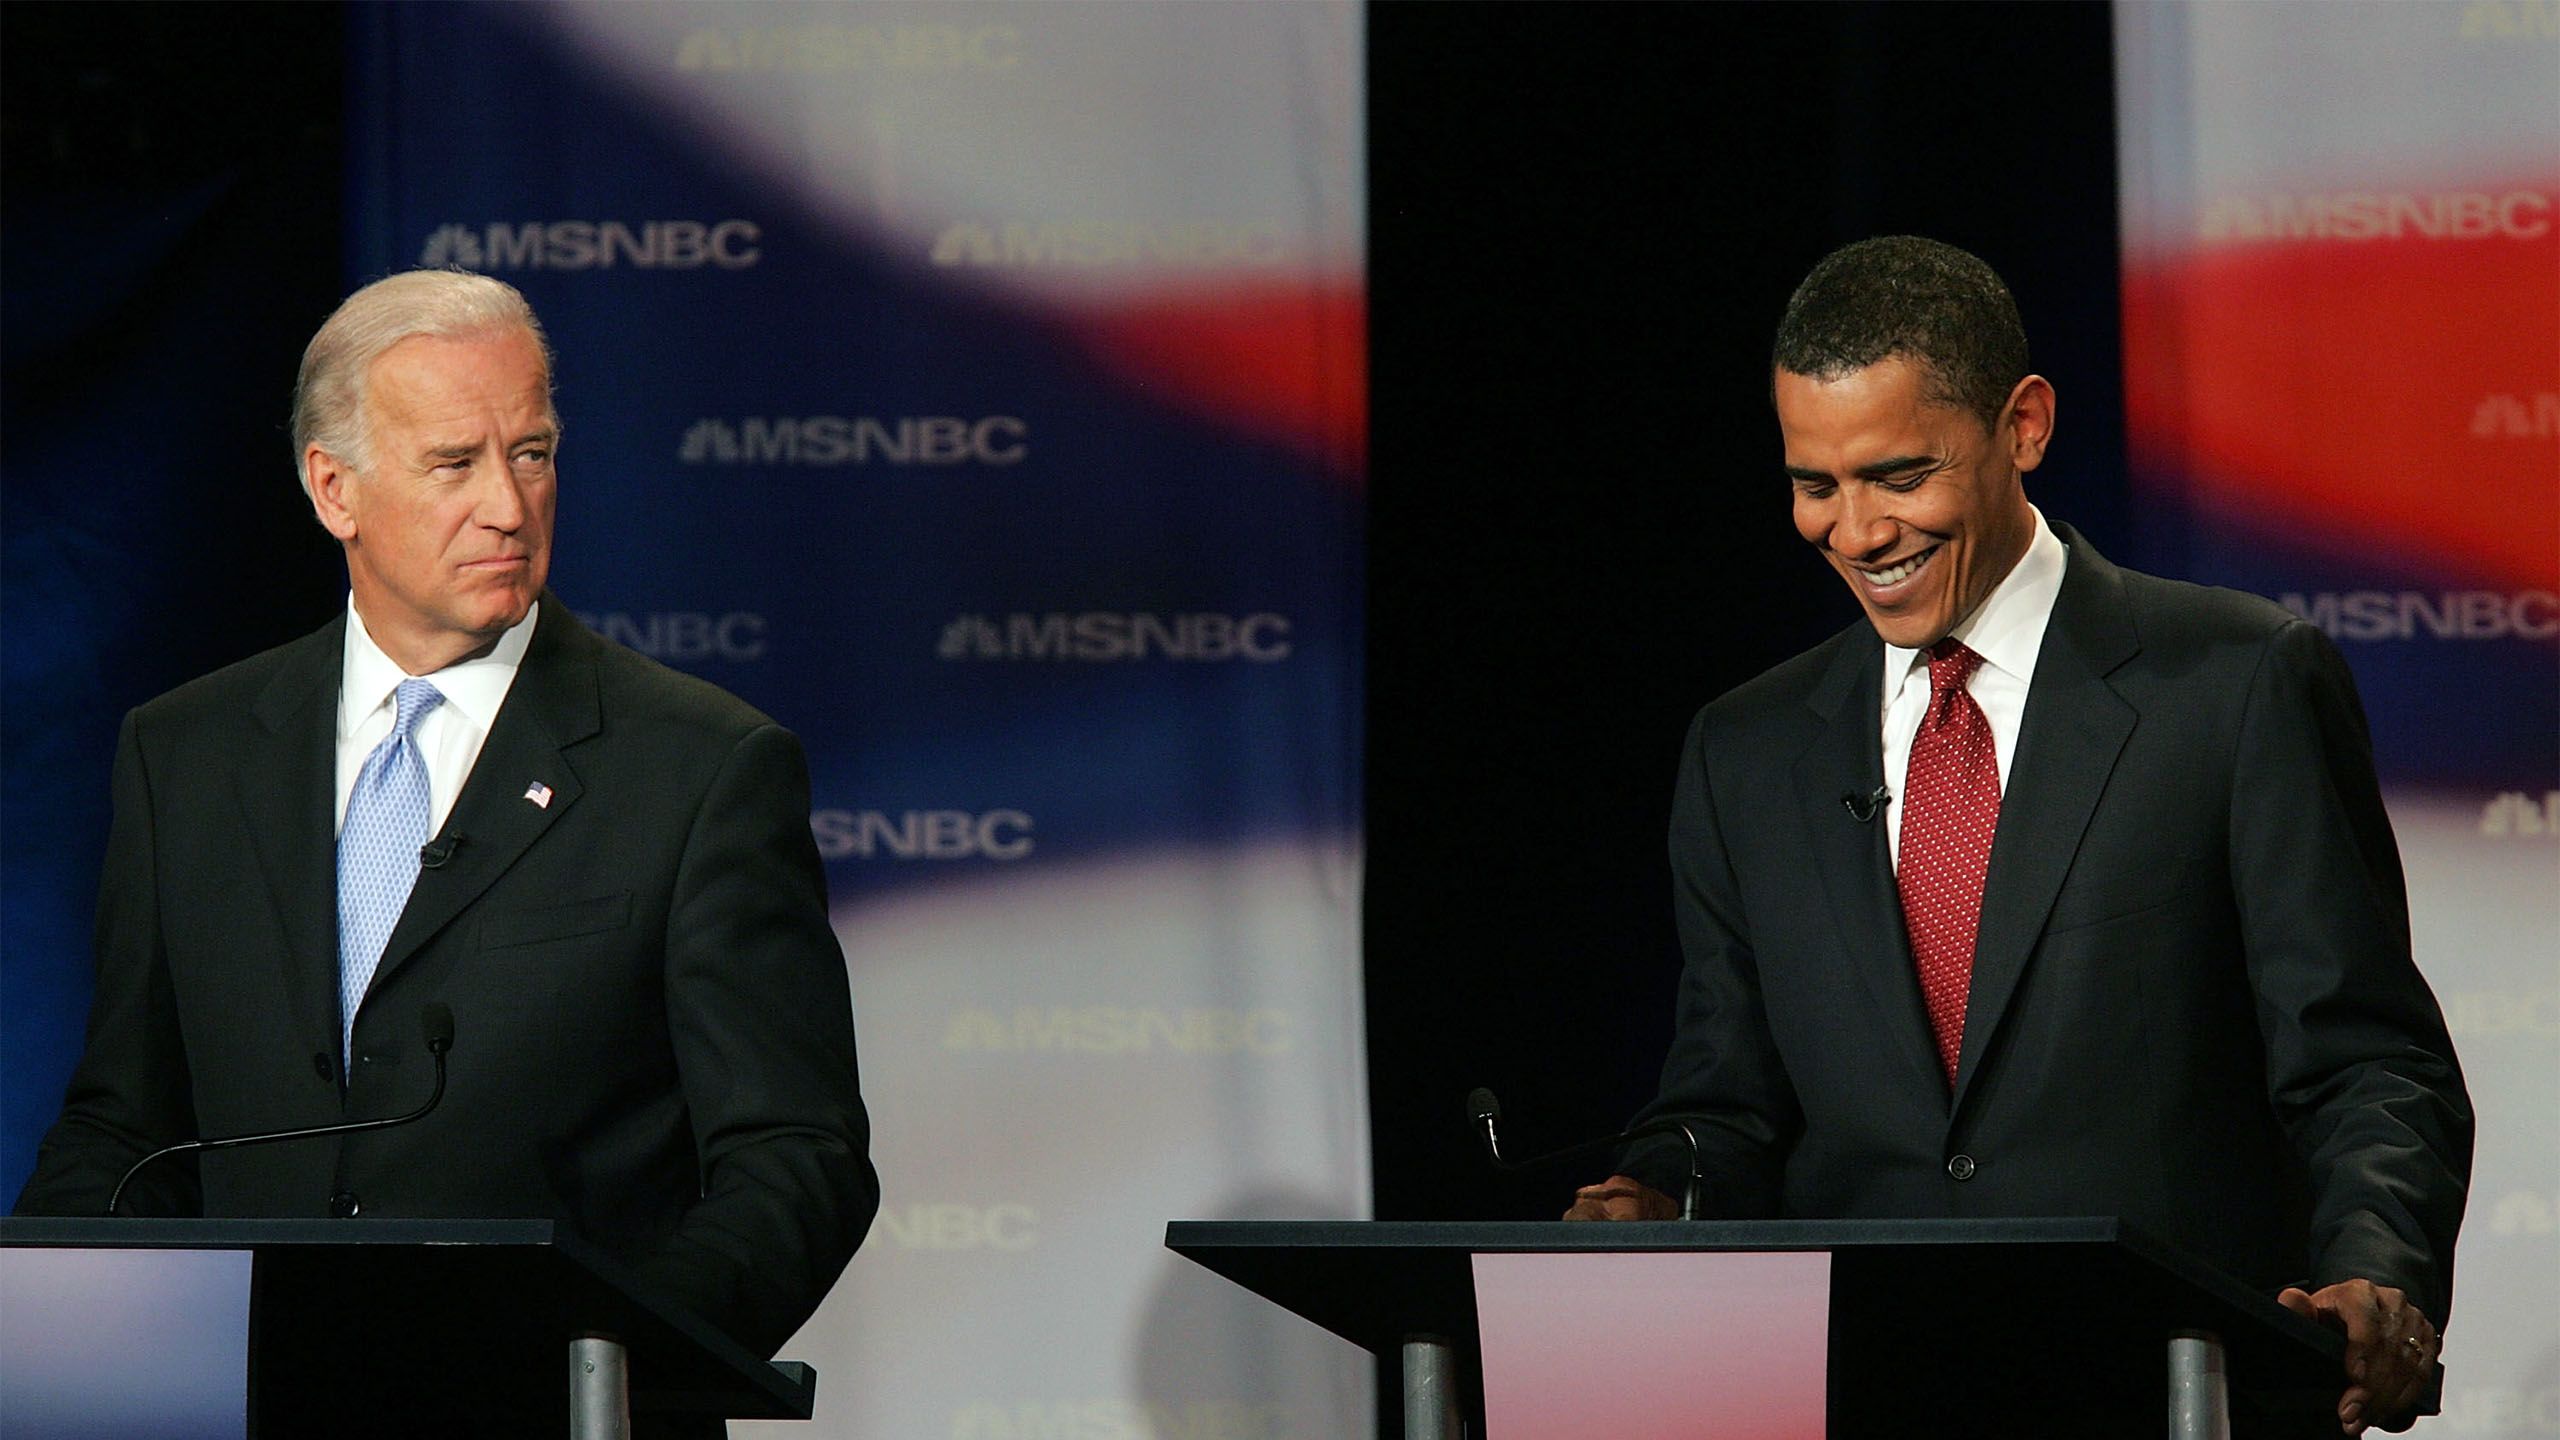 Joe Biden and Barack Obama at the presidential debate, 2007